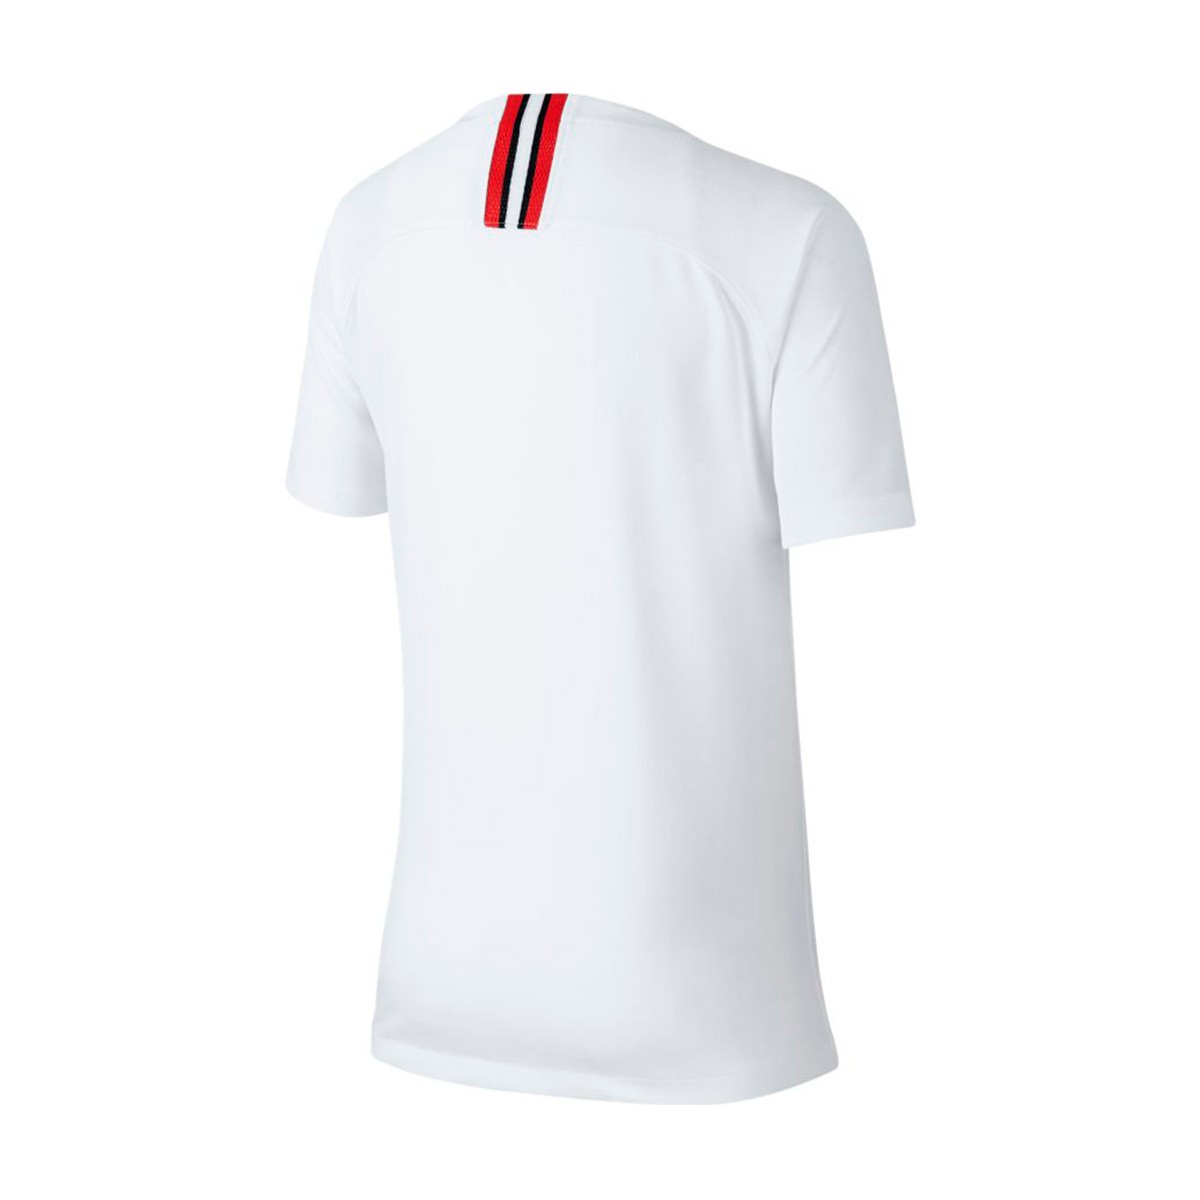 psg white jersey 2018